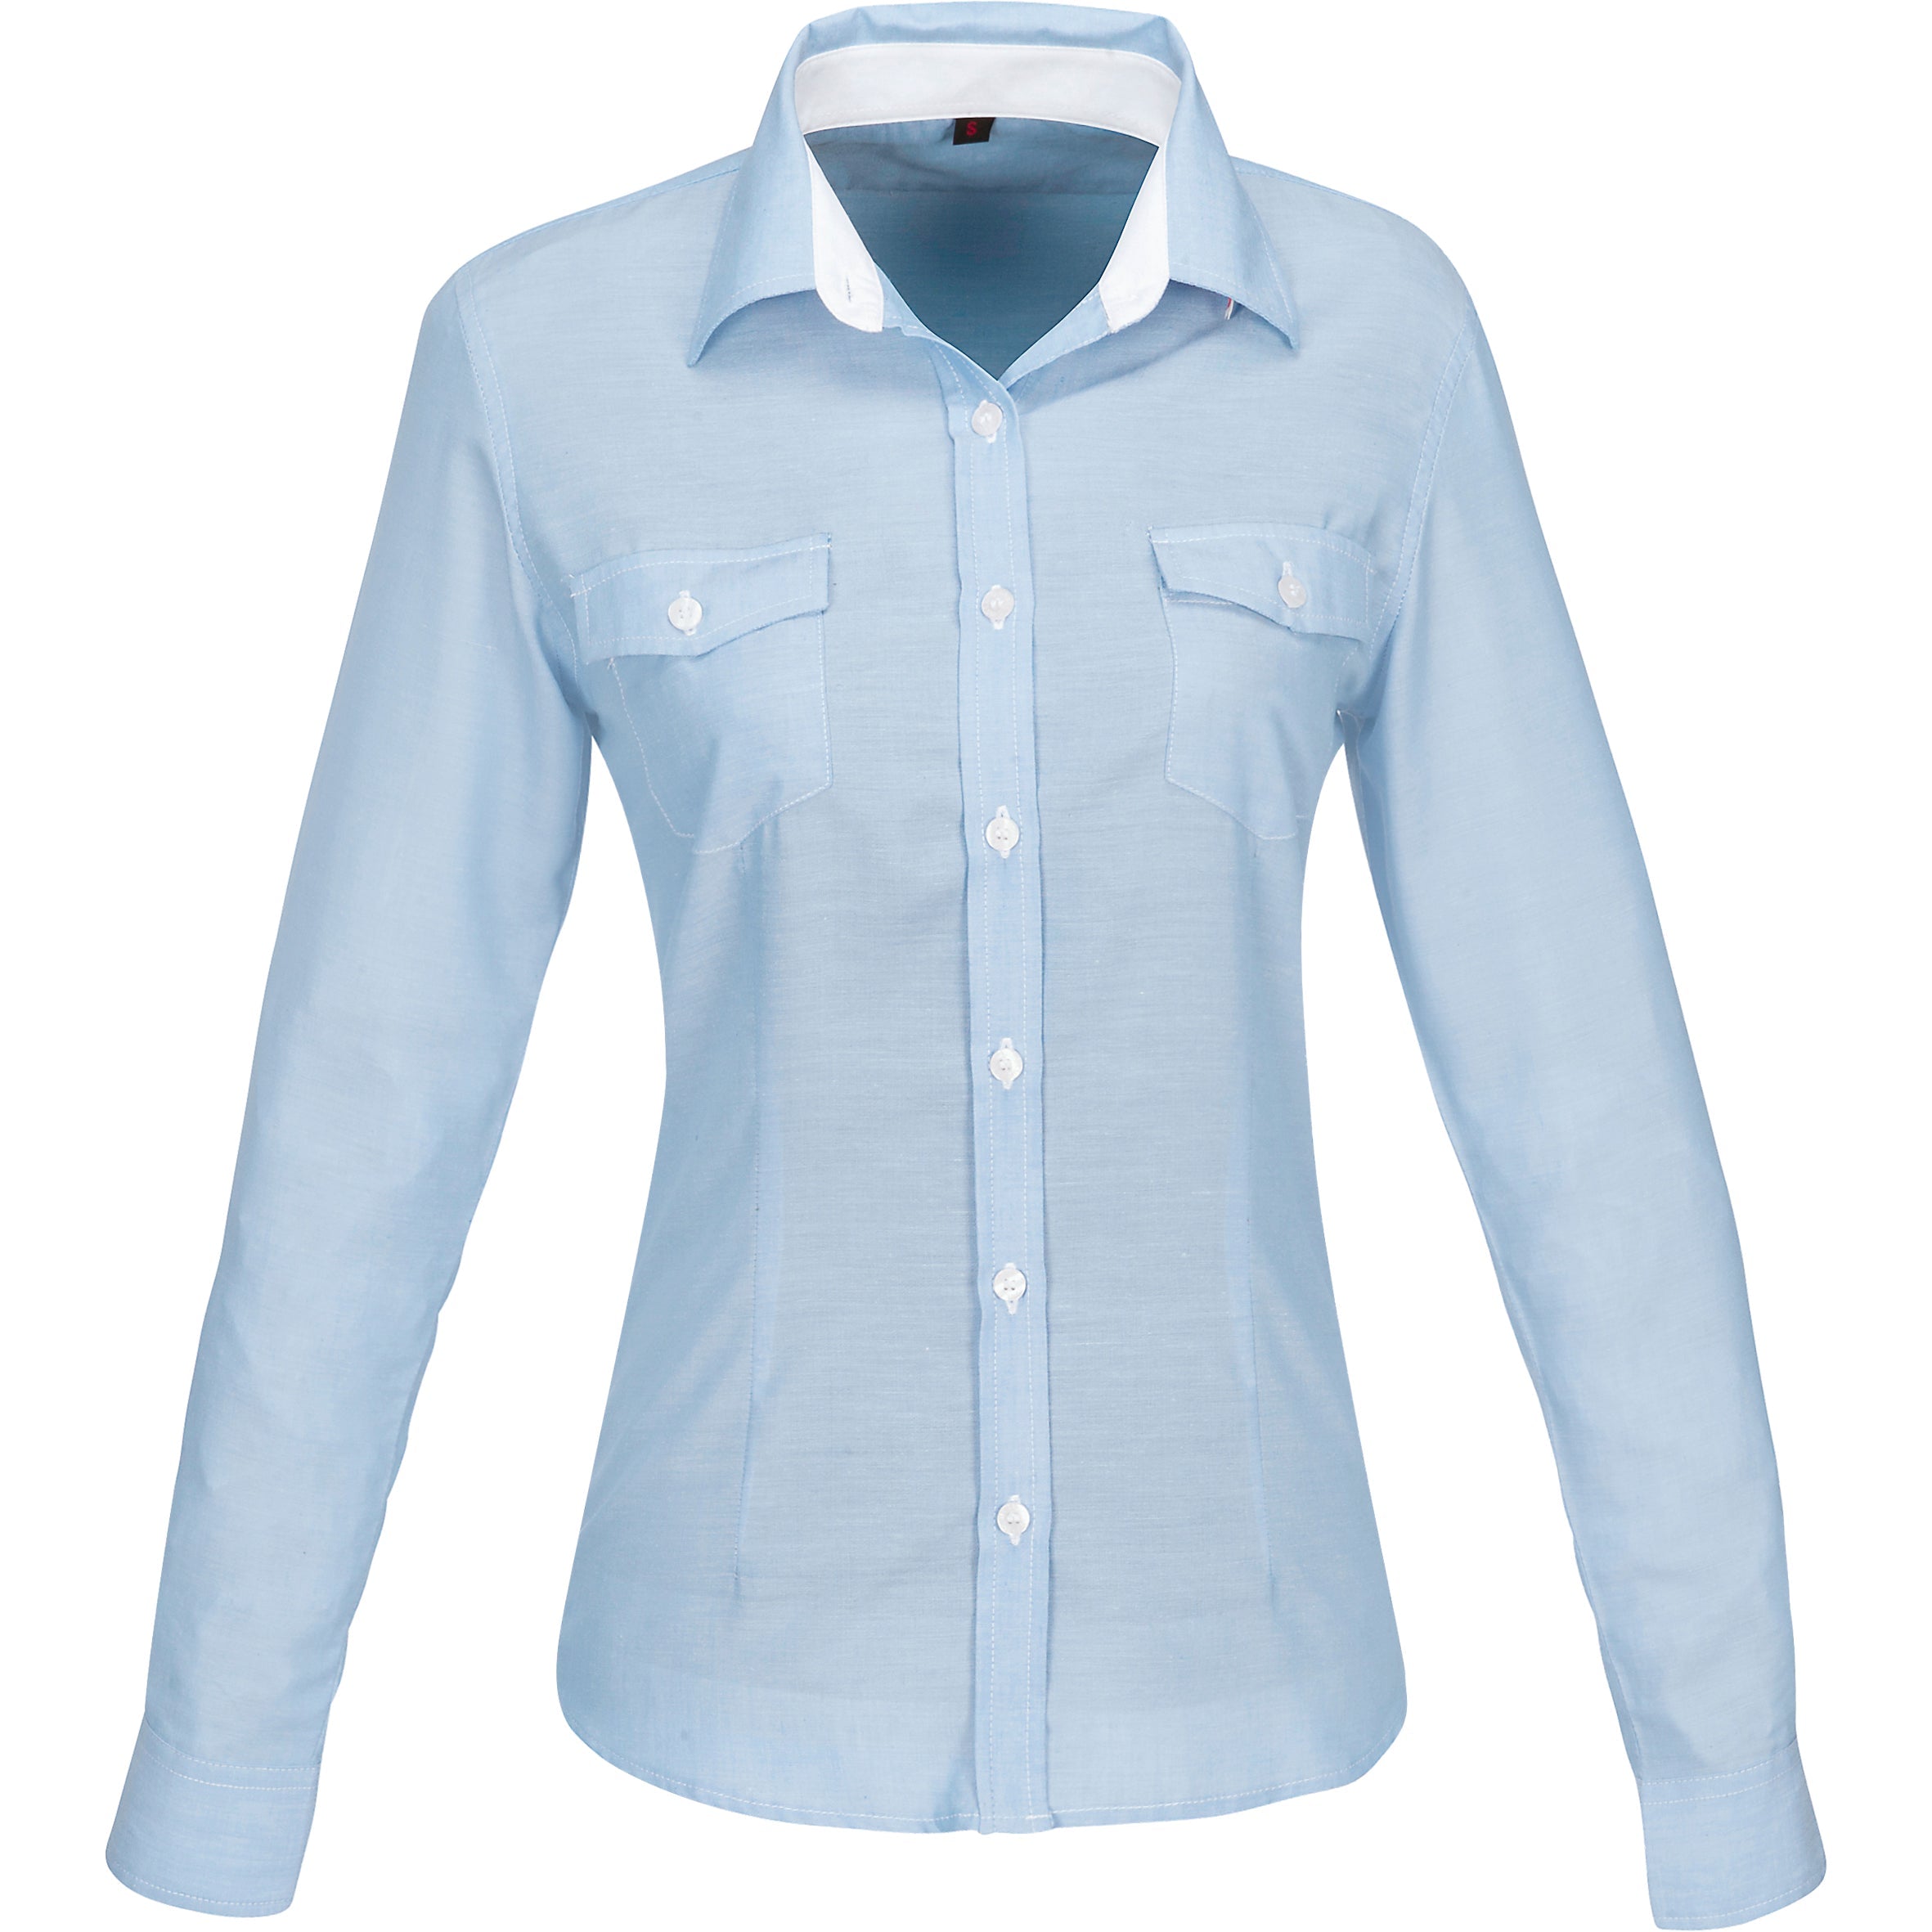 Ladies Long Sleeve Windsor Shirt - Light Blue Only-2XL-Light Blue-LB